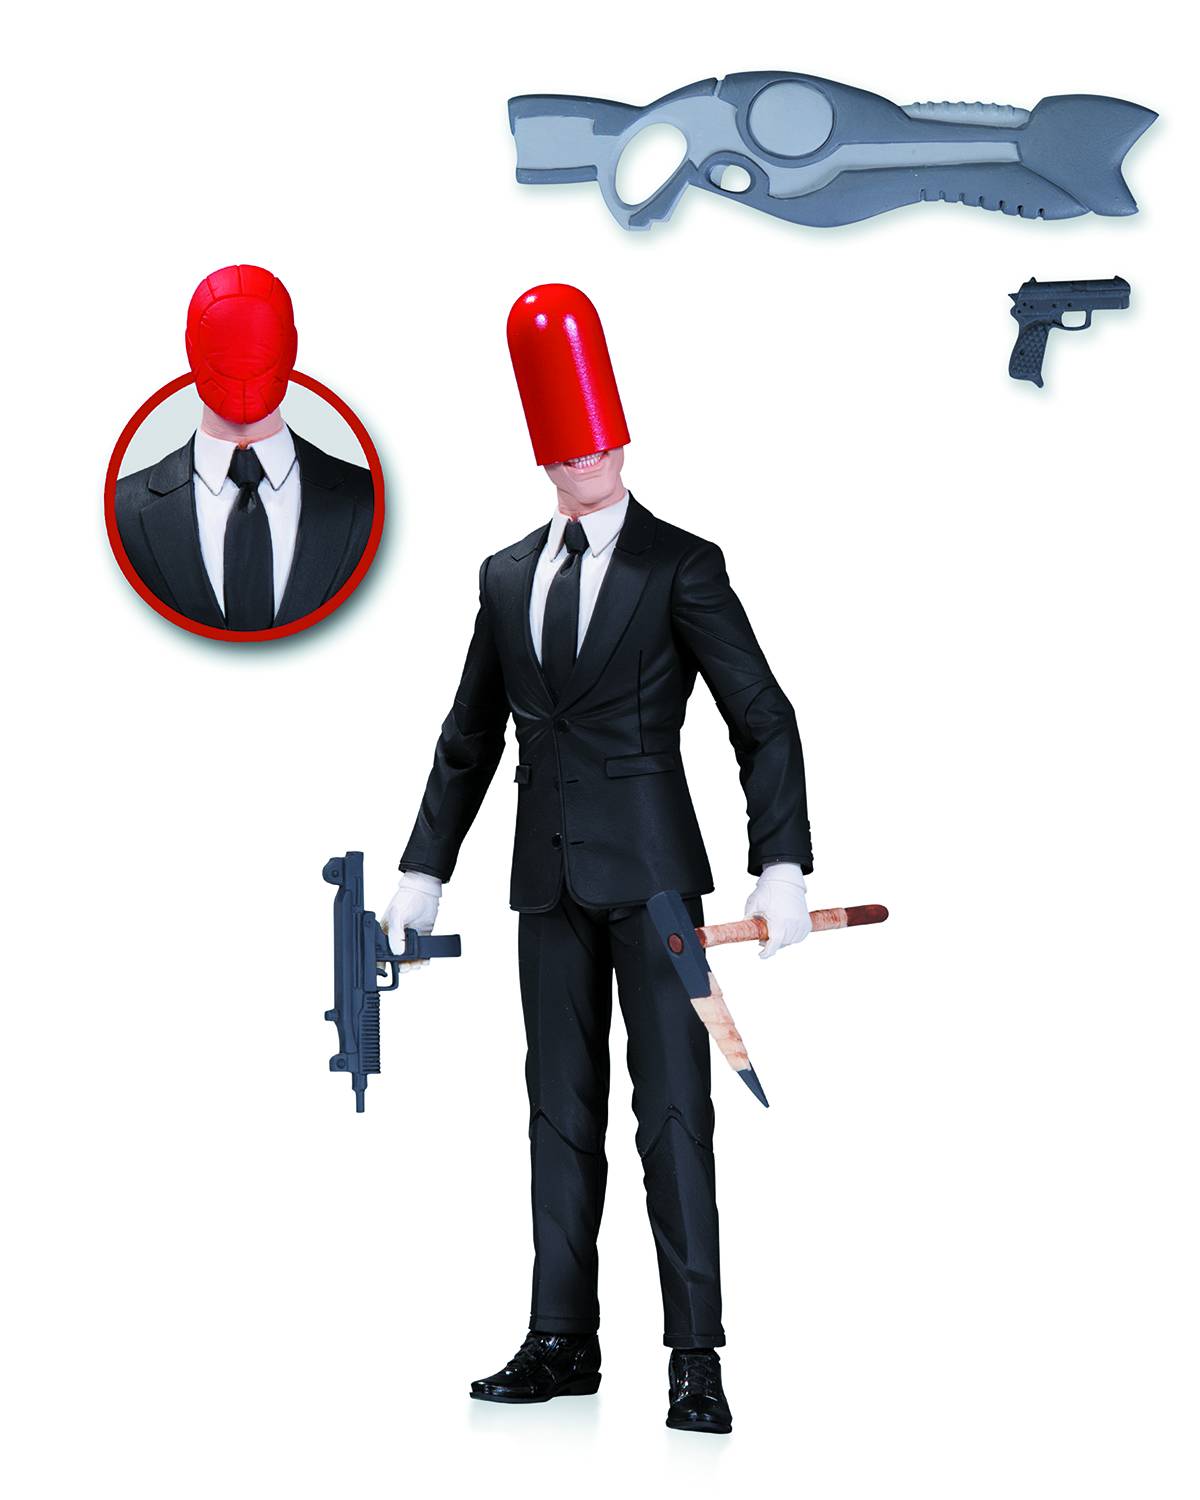 DC Comics Designer Series 2 Capullo Red Hood Action Figure